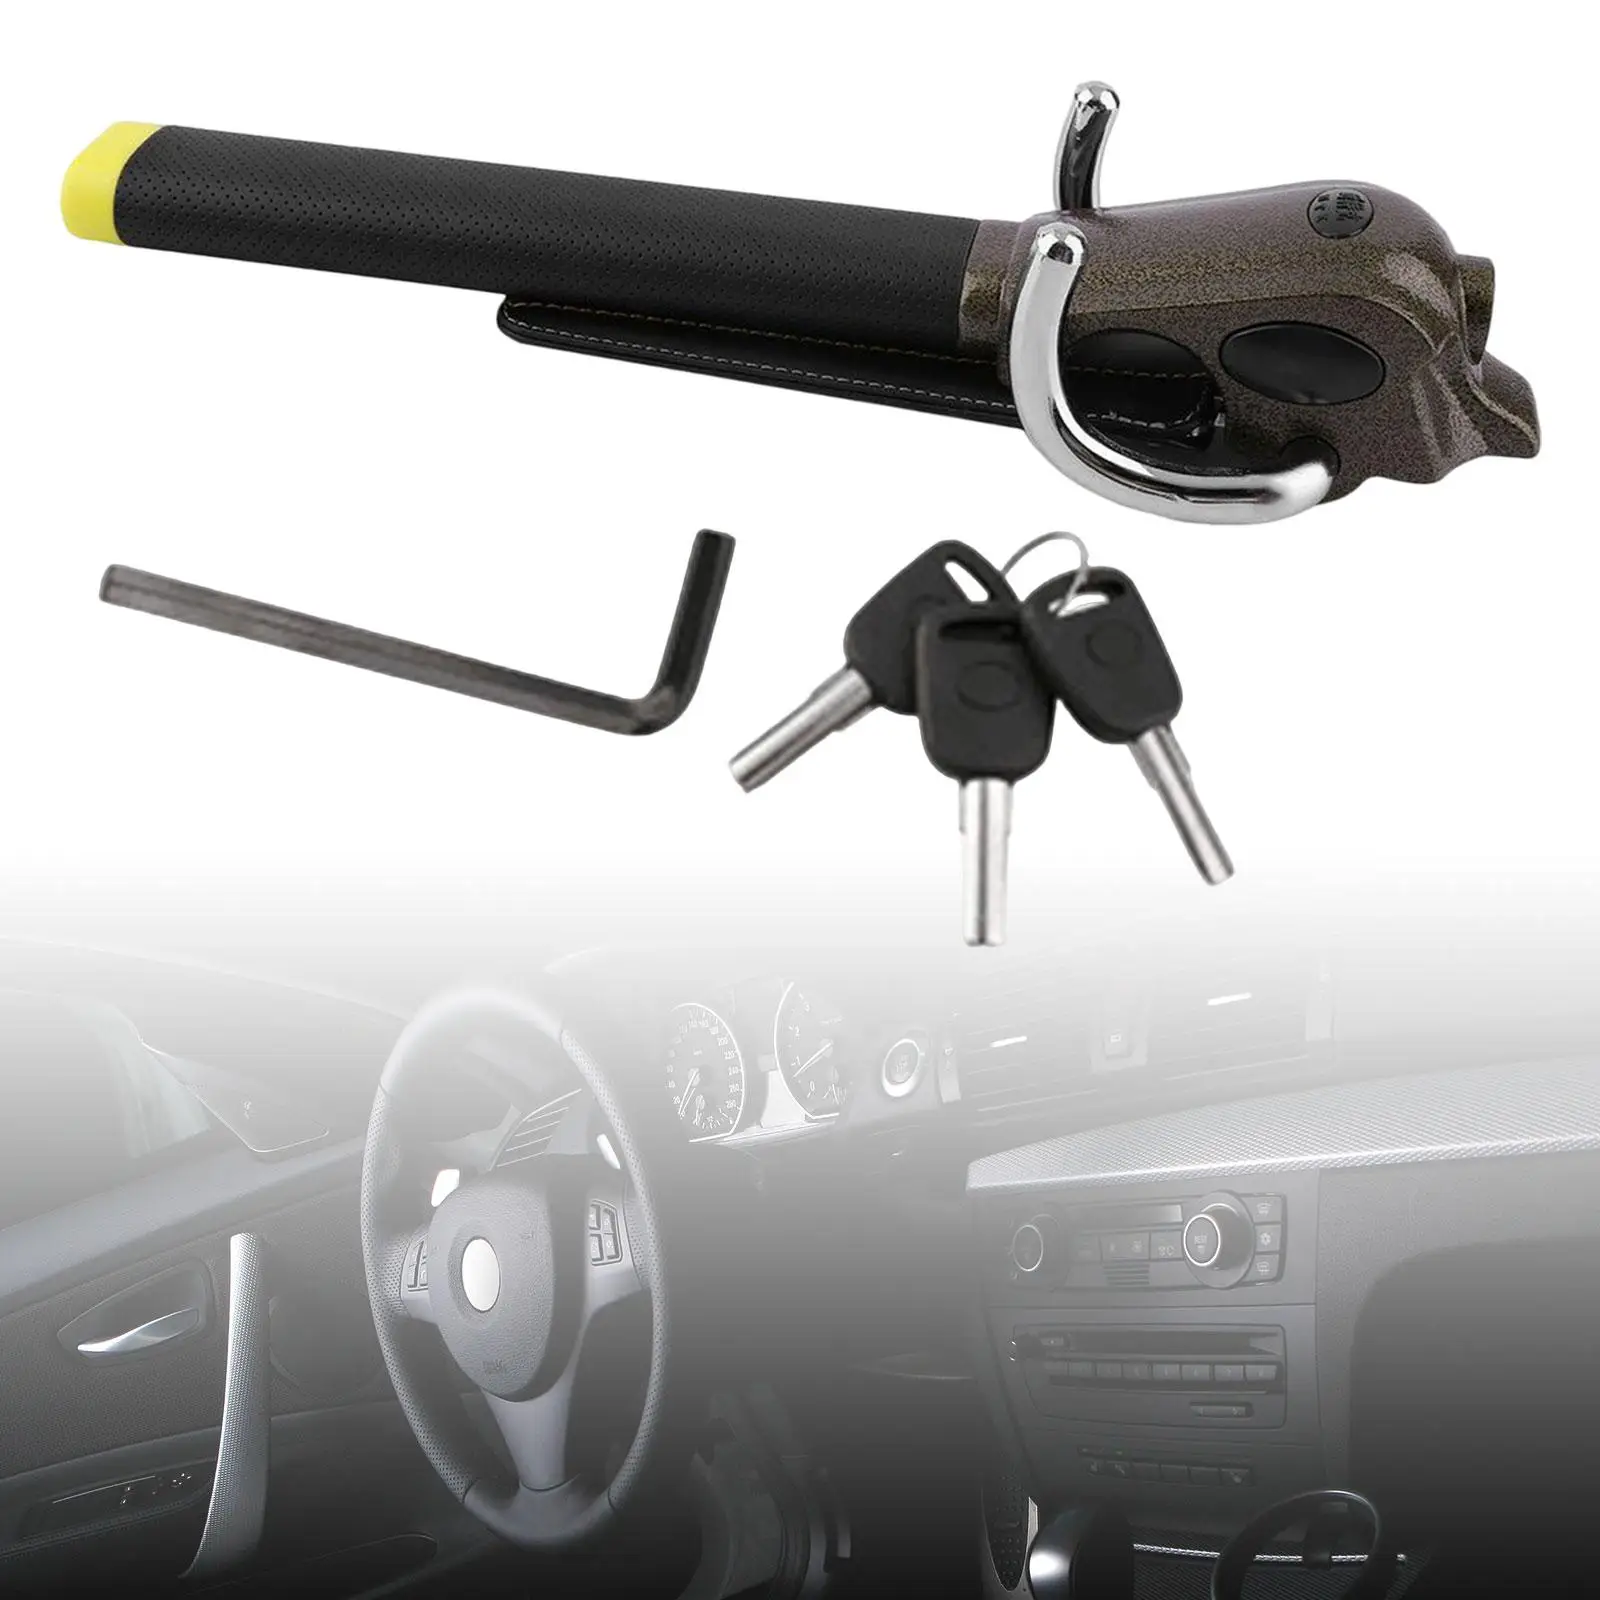 Steering Wheel Lock with 3 Keys Sturdy Steel Aluminum Alloy Heavy Duty Vehicles Lock Accessories for Van Vehicles SUV Cars